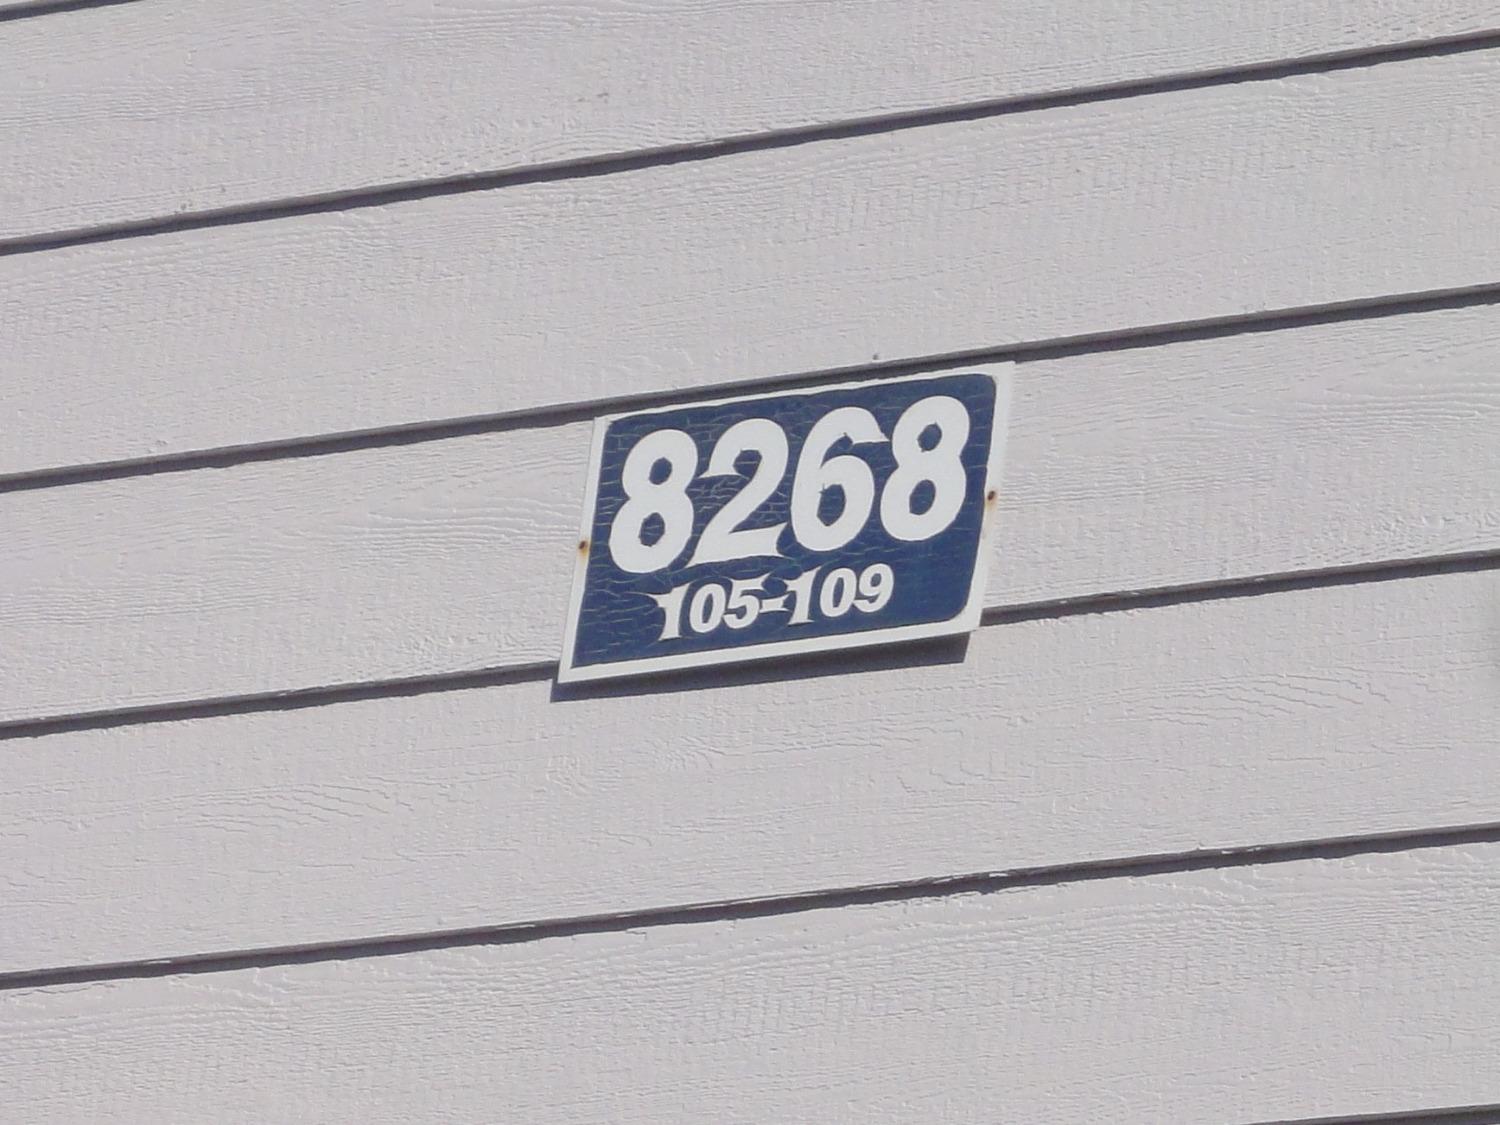 Building Number